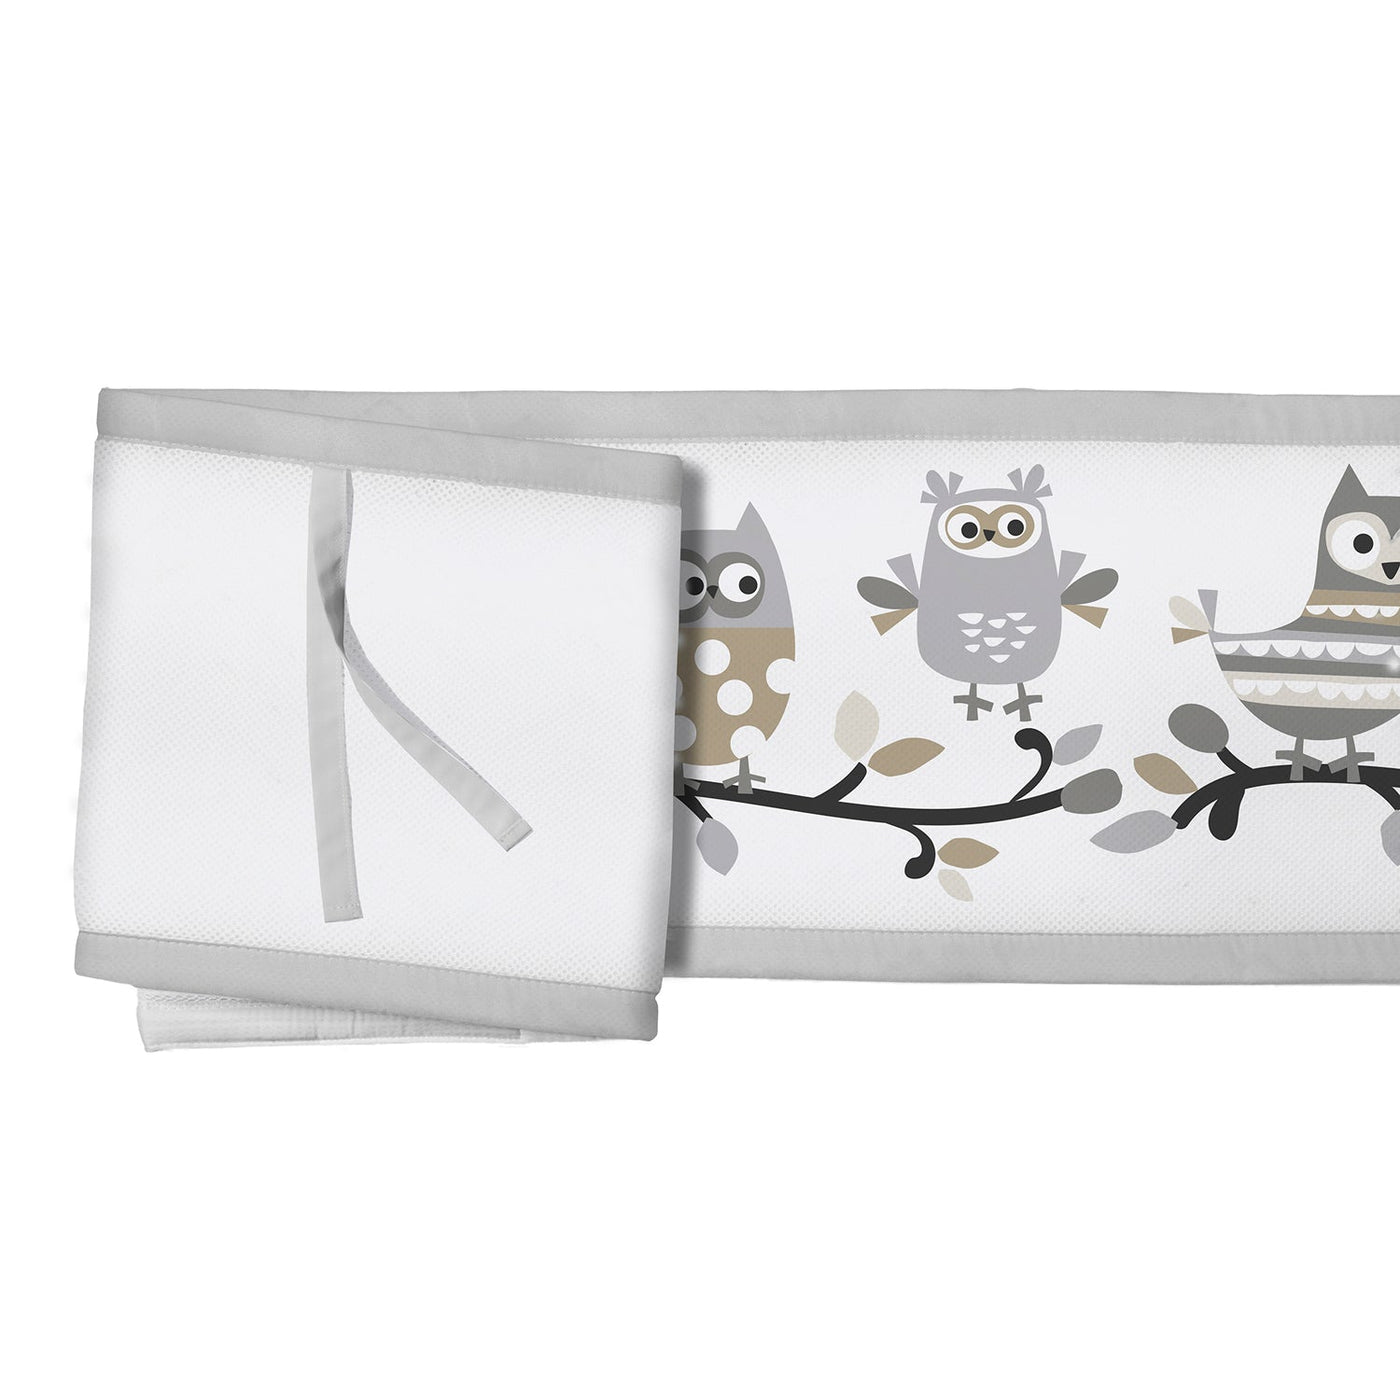 Breathable Baby 3 Piece Classic Crib Bedding Set, Owl Fun Gray